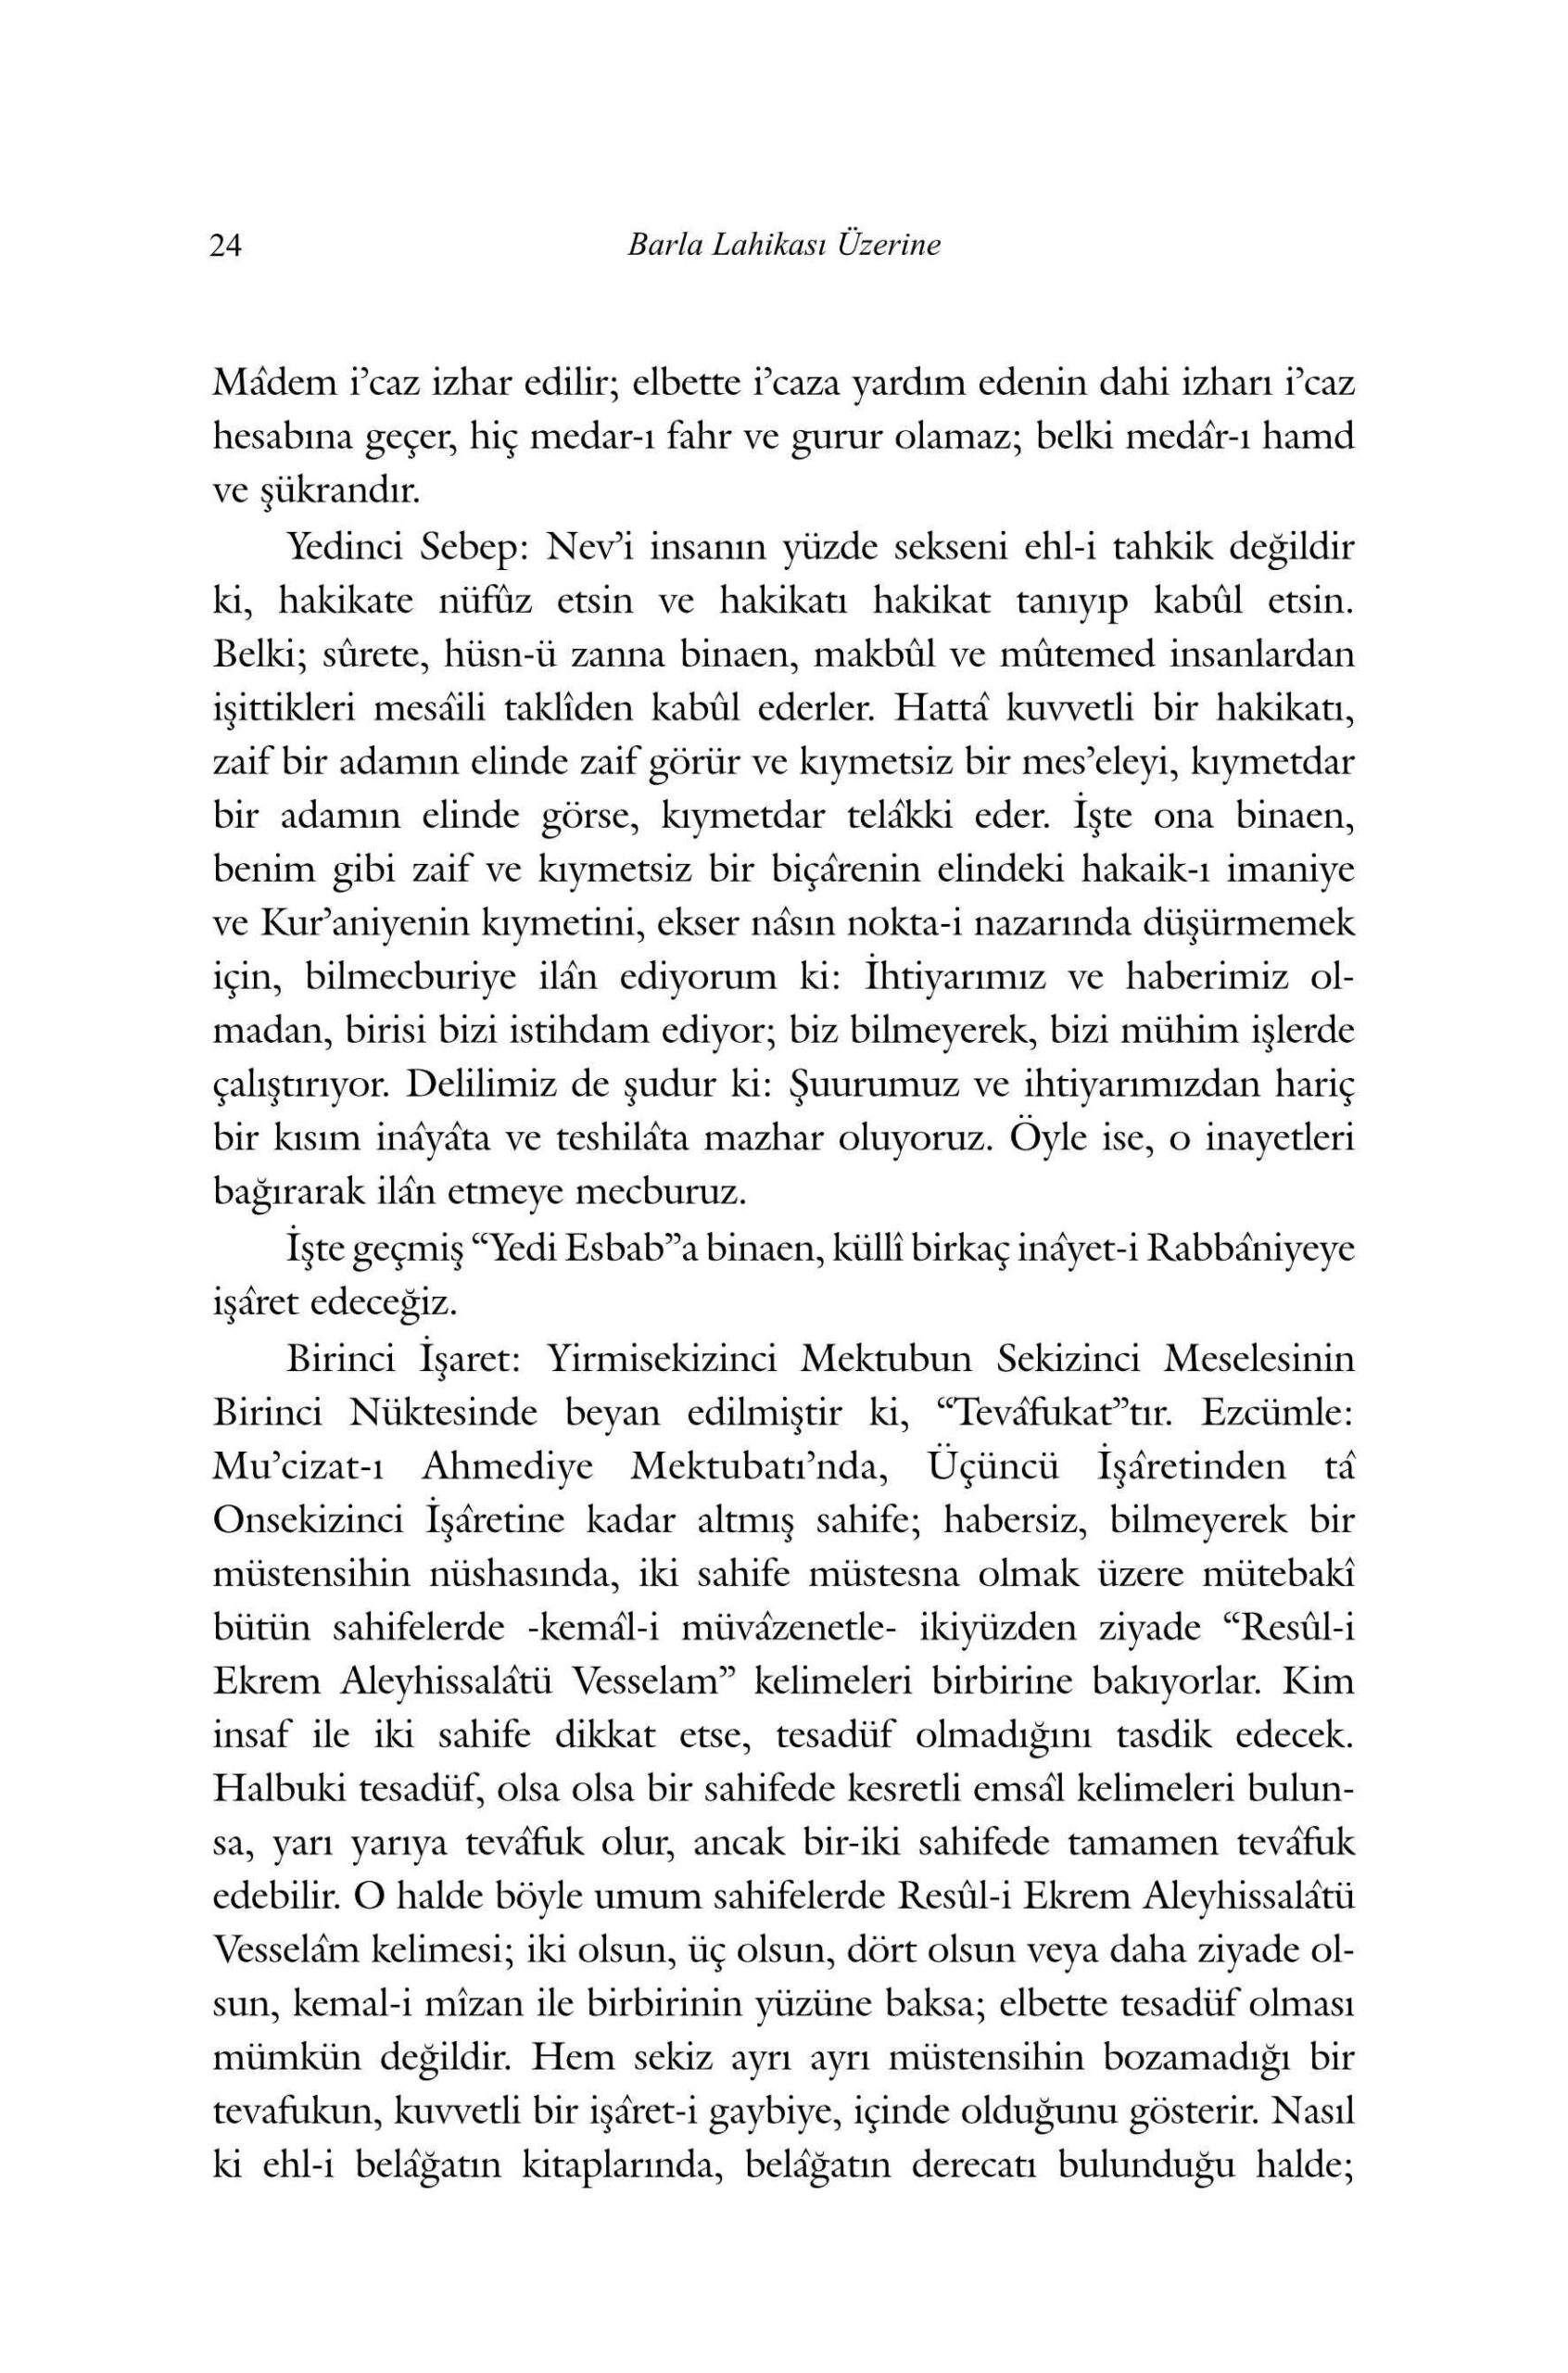 B Said Nursi - Abdullah Aymaz - Barla Lahikasi Uzerine - SahdamarY.pdf, 473-Sayfa 